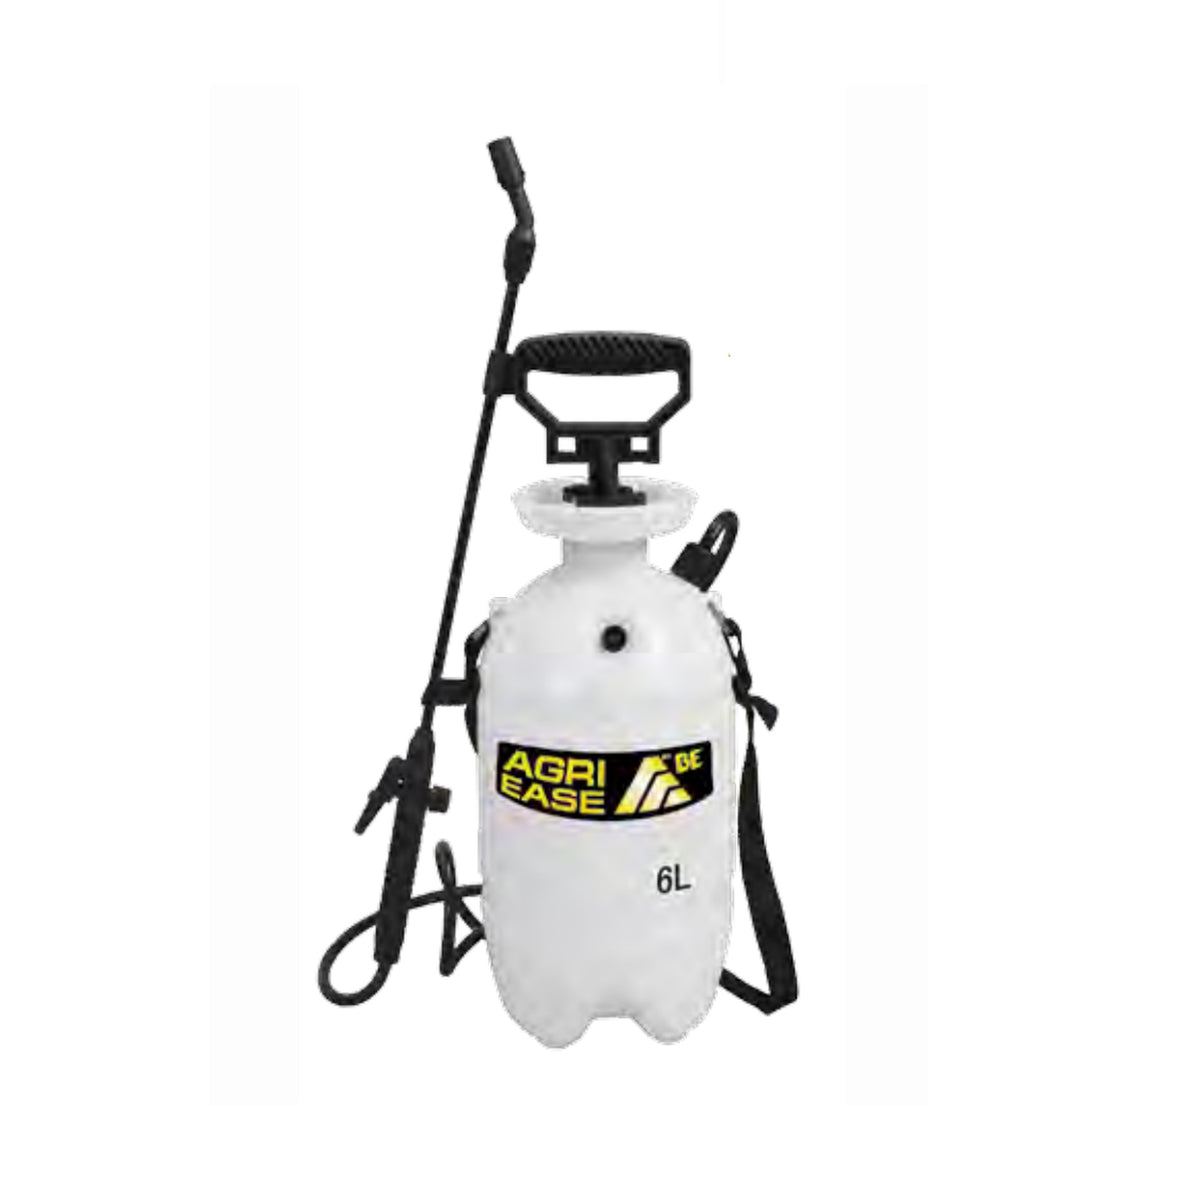 BE Handheld Pump Sprayer 6L (1.59 Gal)